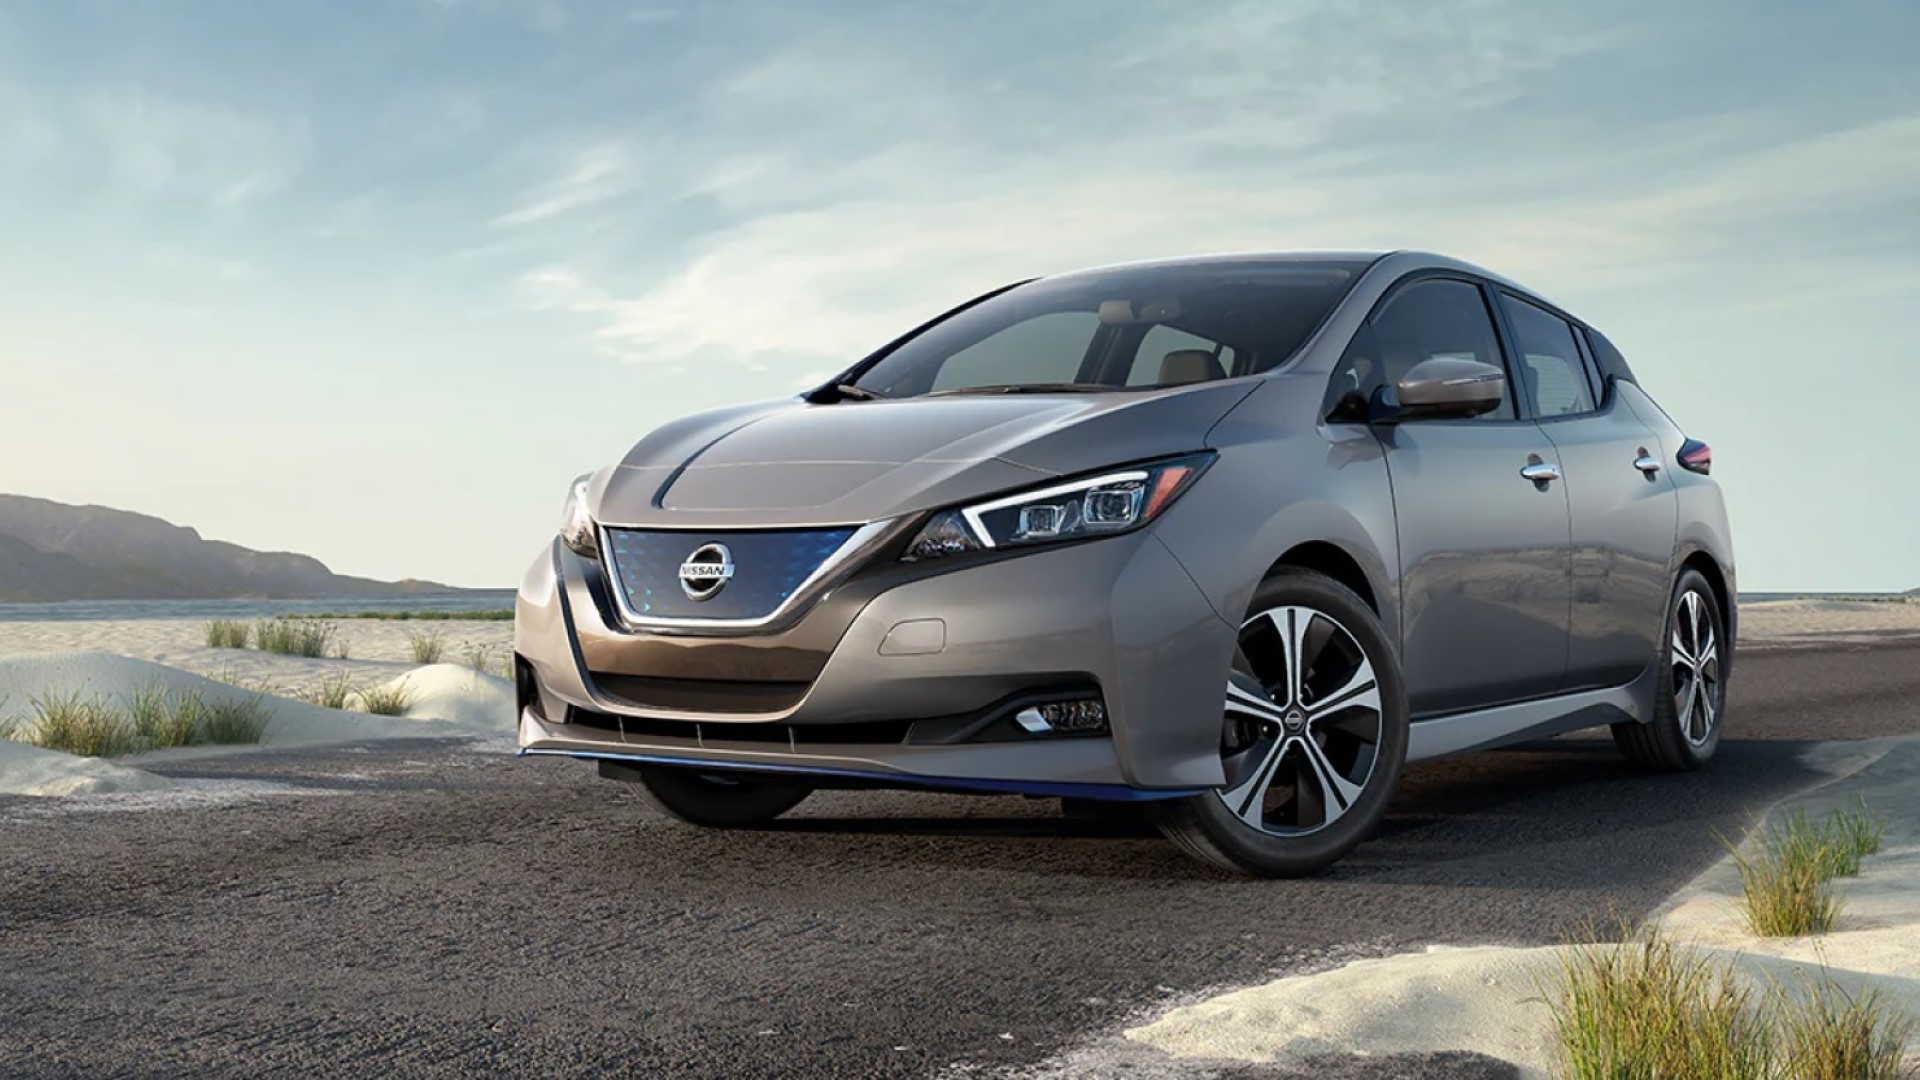 Nissan Leaf 2022 ราคาเริ่มต้น 907,378 บาท เป็นรถยนต์ไฟฟ้าถูกที่สุดในสหรัฐฯ